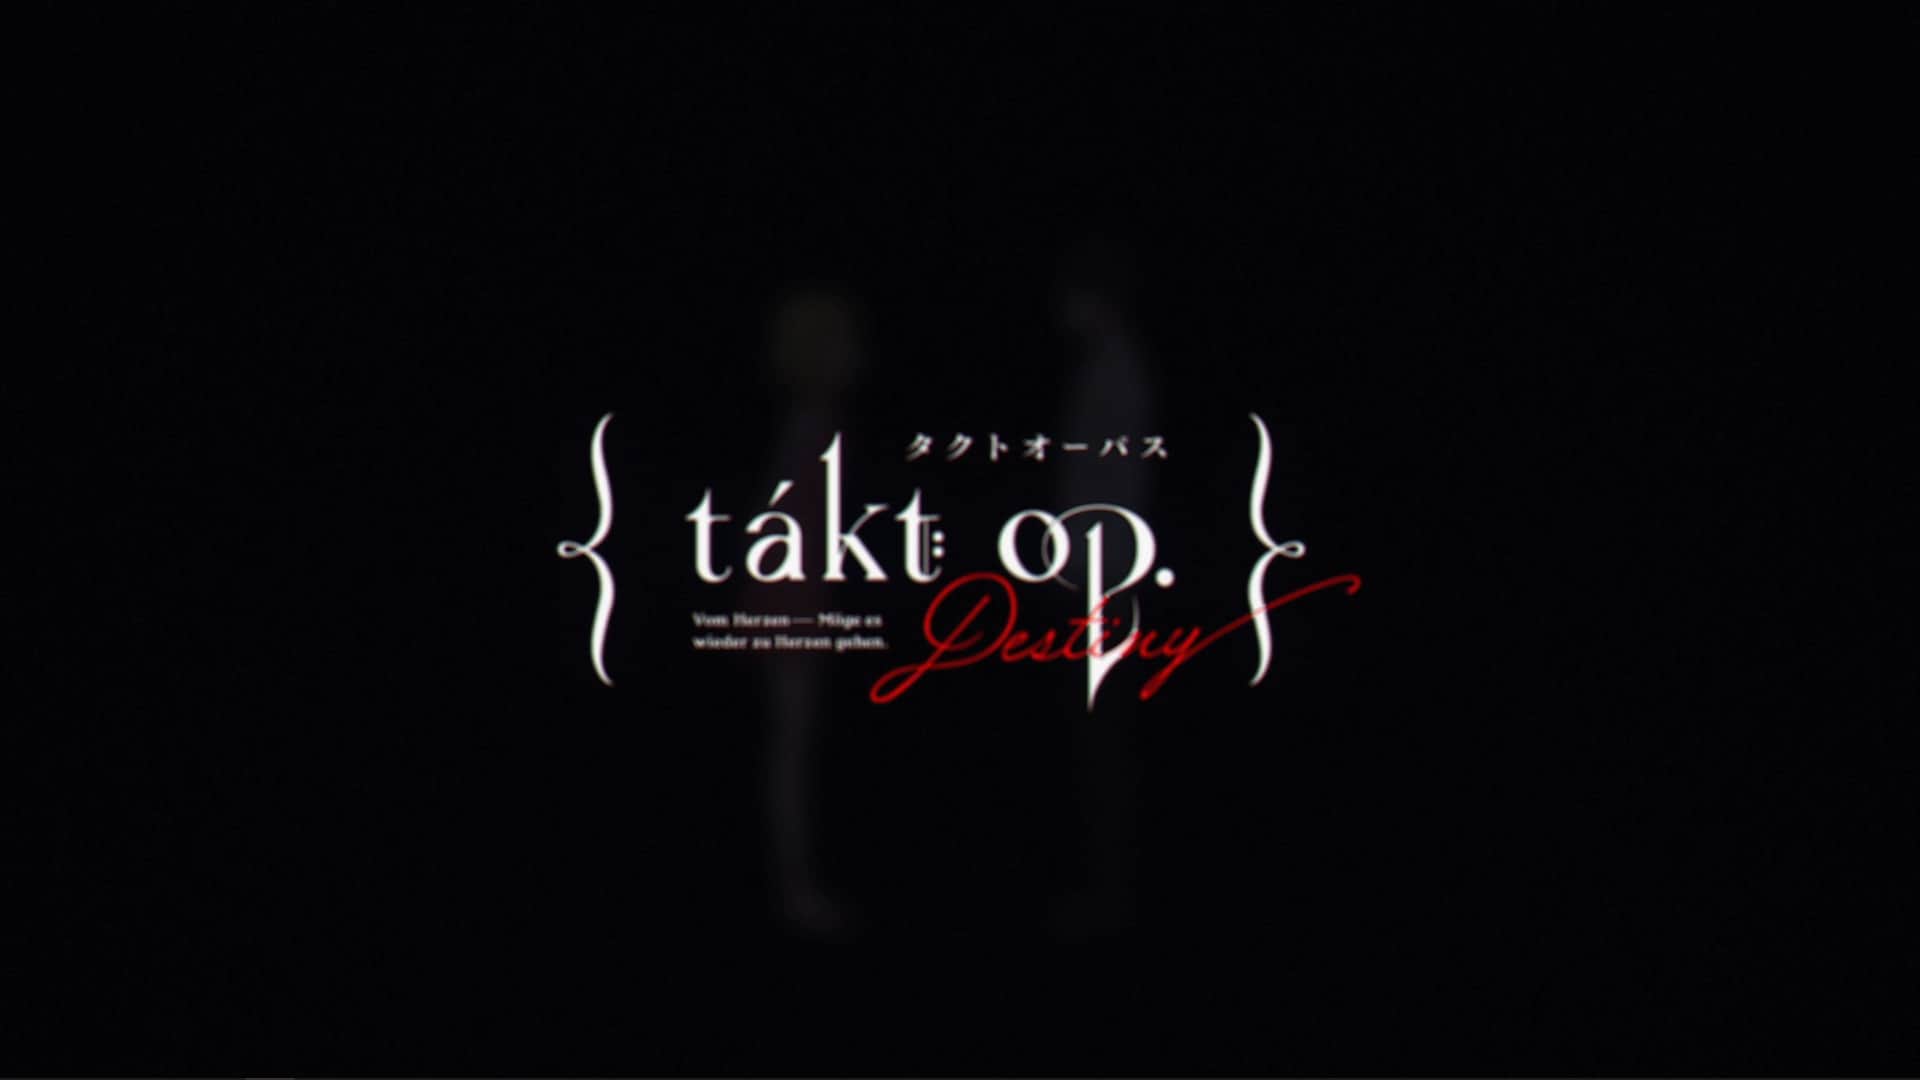 Title Card 2 - Takt Op.Destiny Season 1 Episode 2 “Chapter 2 Music -Reincarnation-”